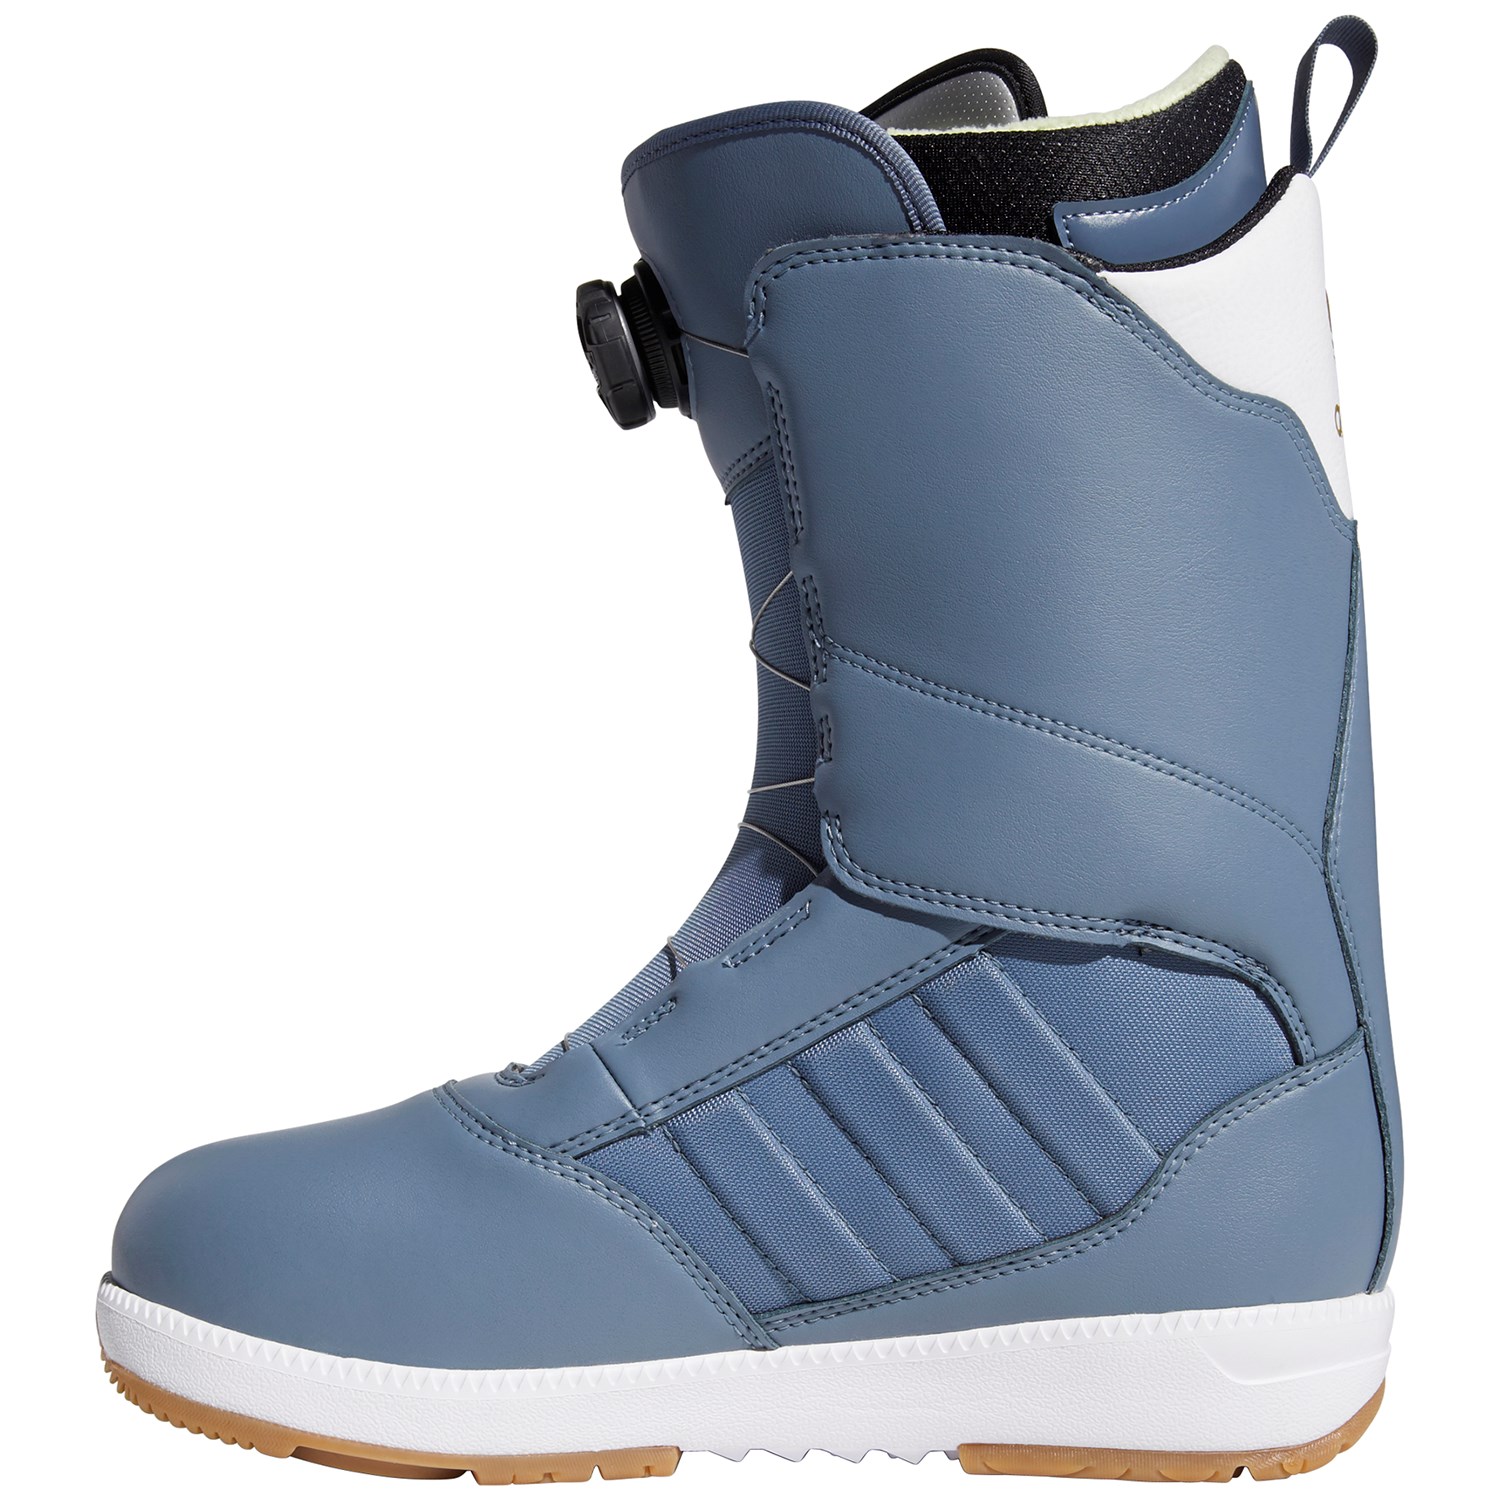 Adidas Response 3MC ADV Snowboard Boots 2020 | evo